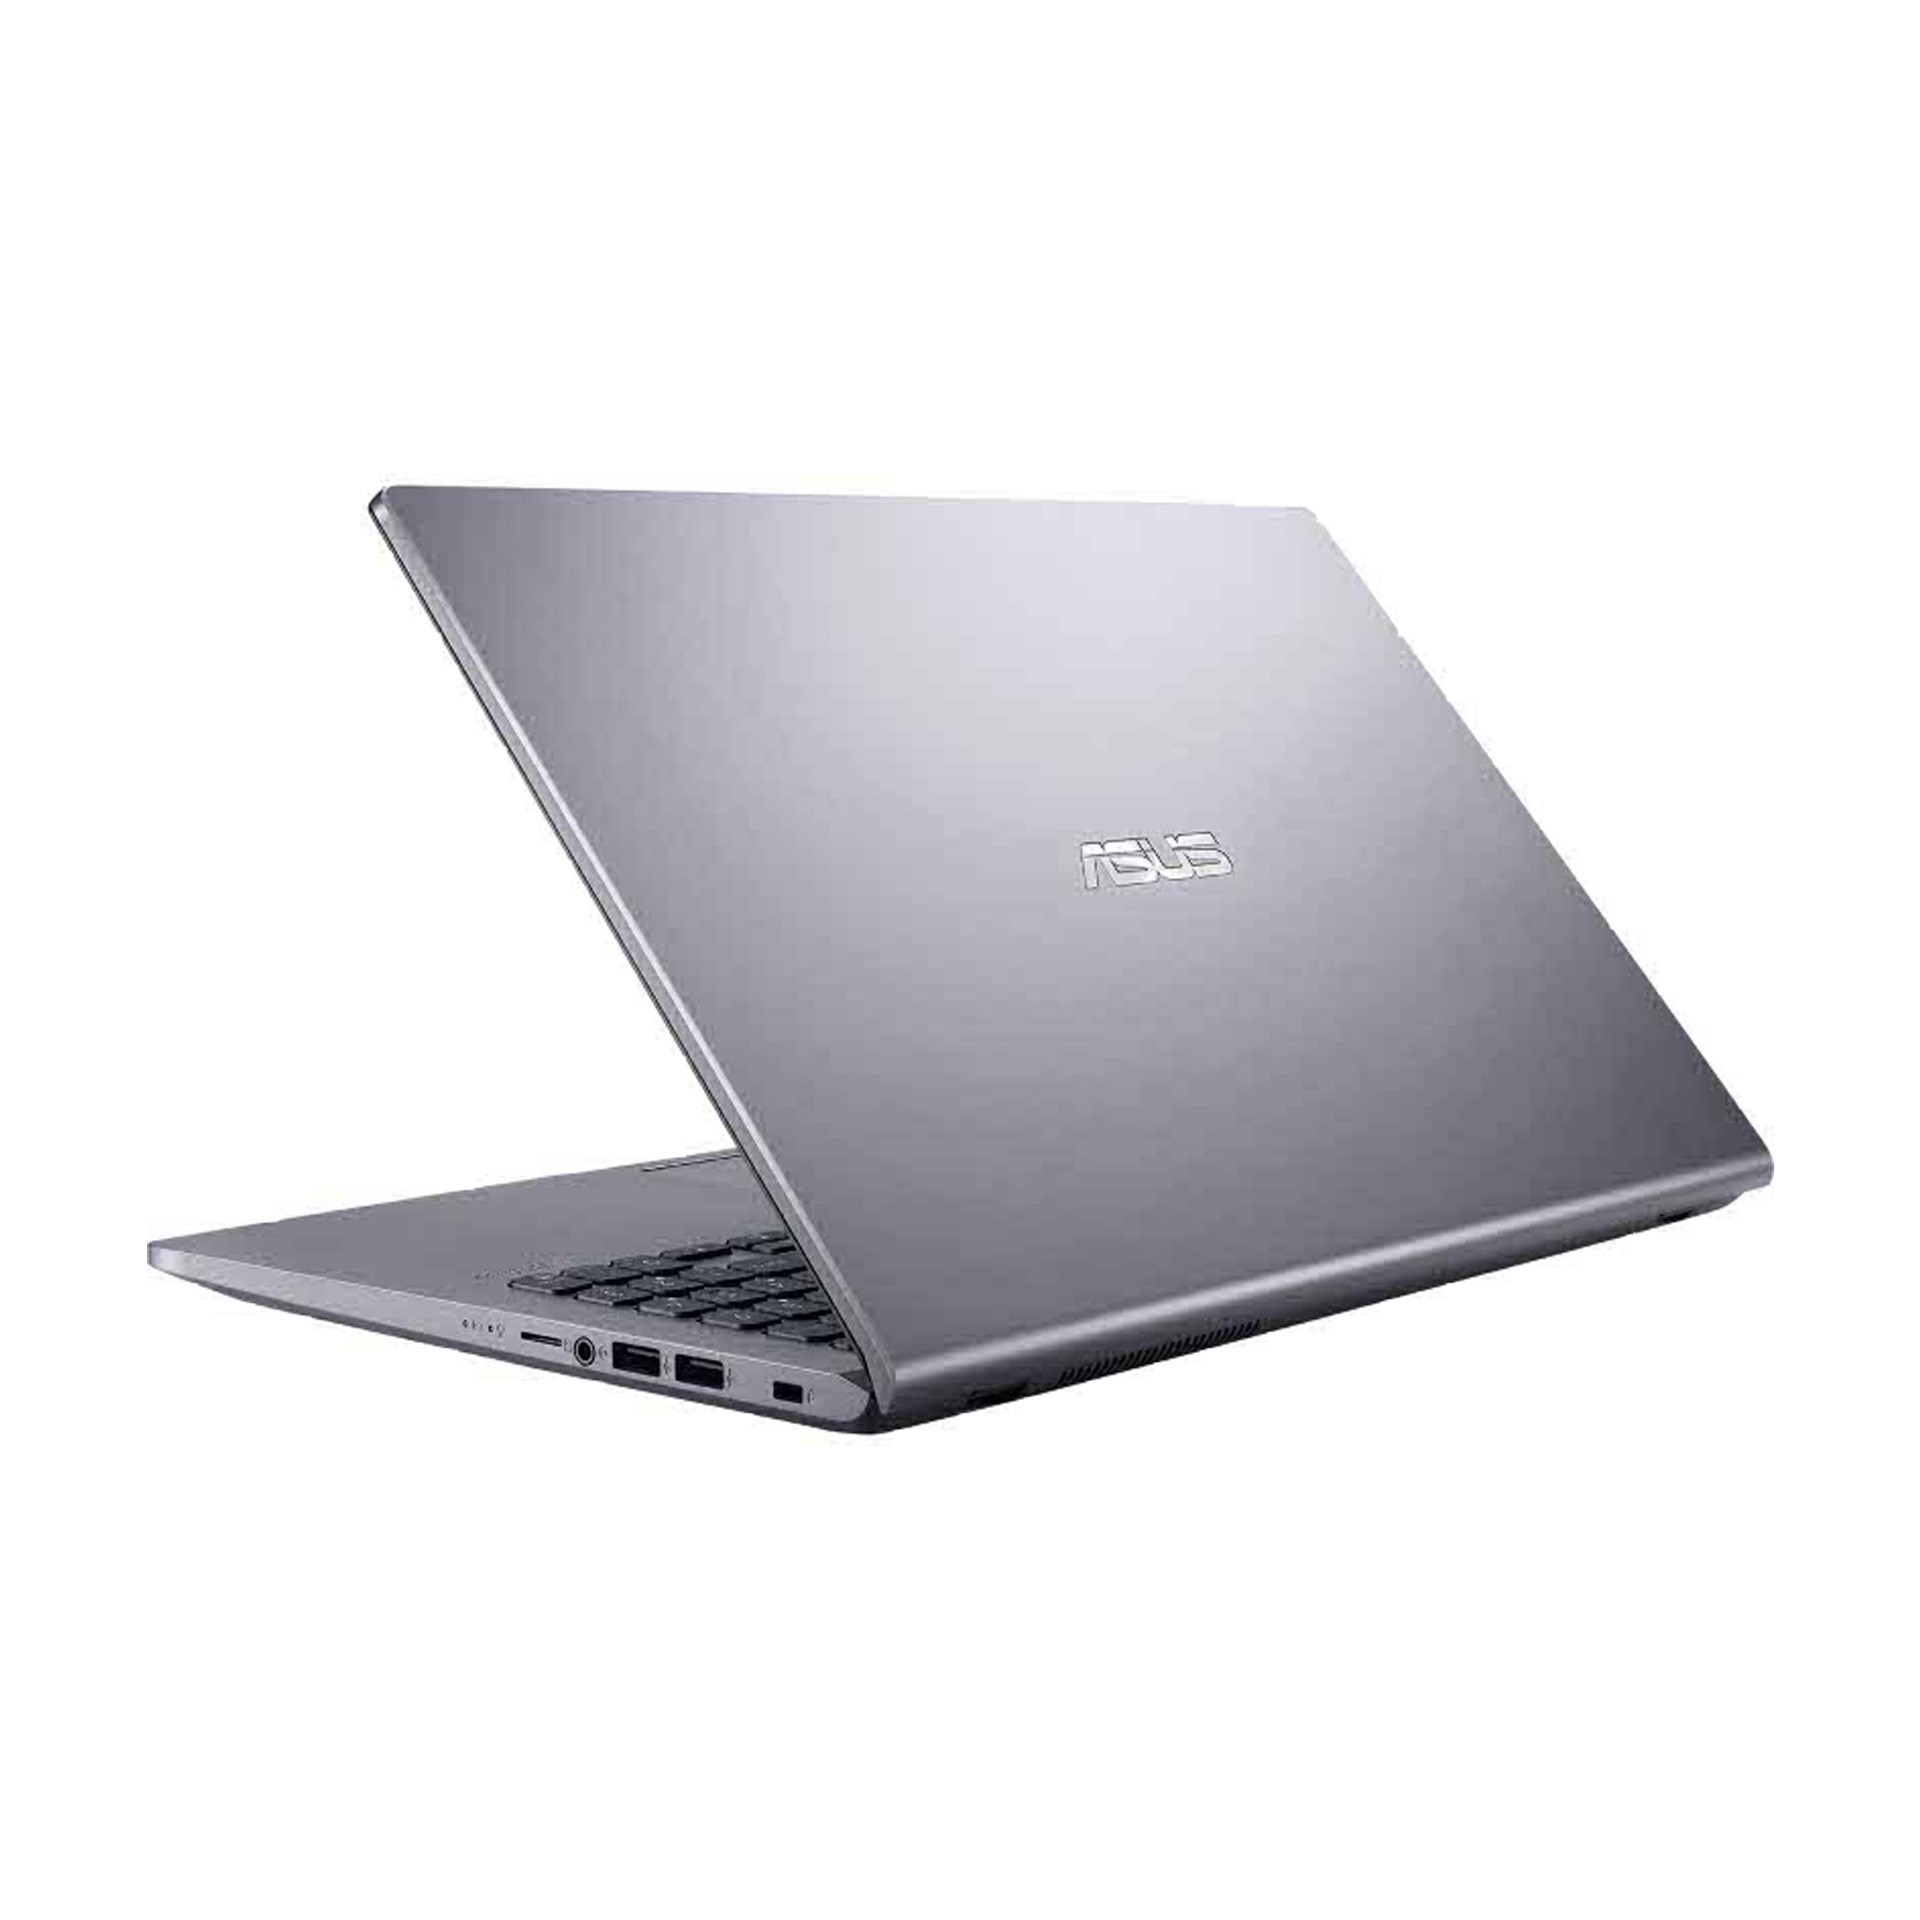 Asus D509BA-EJ077T AMD A9 4/128G SSD Laptop